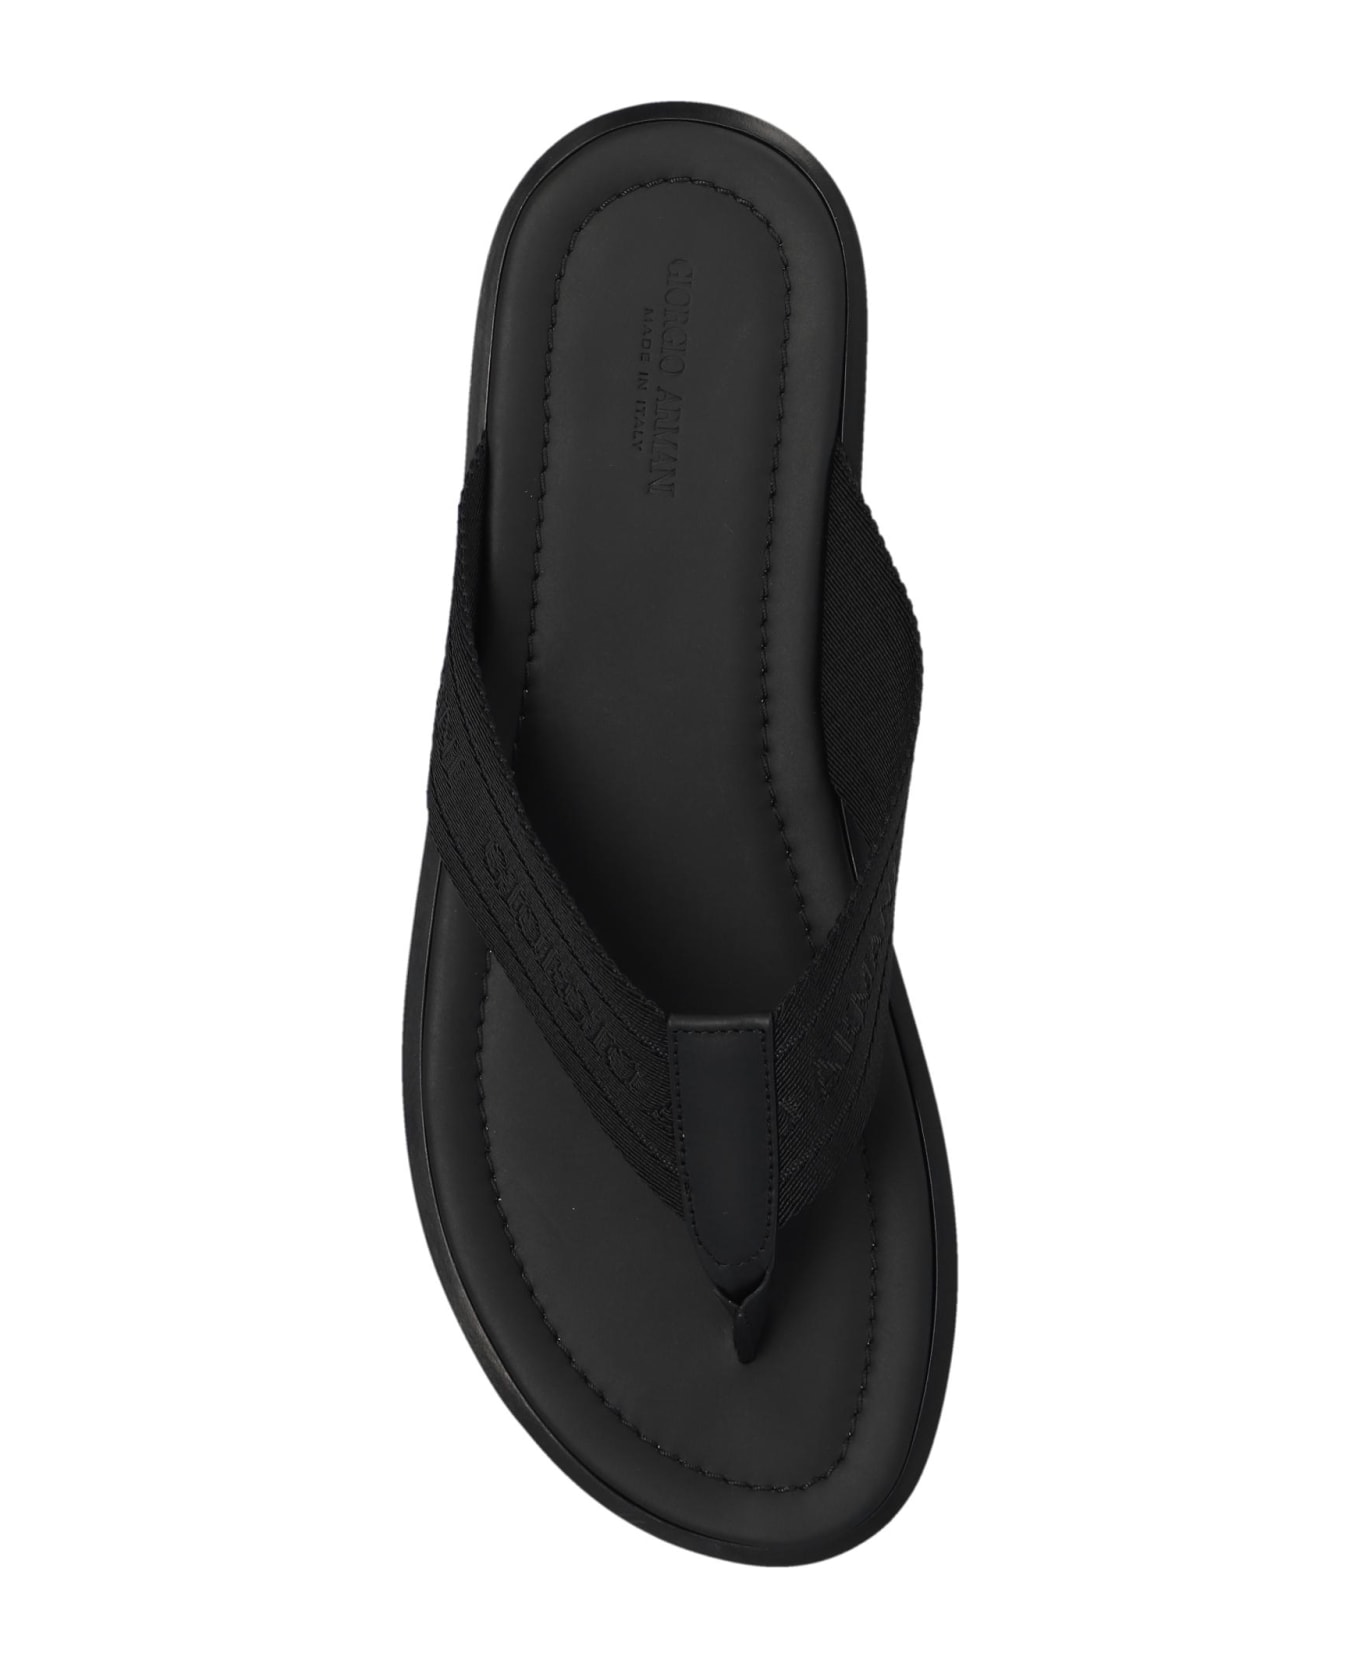 Giorgio Armani Flip-flops With Logo - BLACK